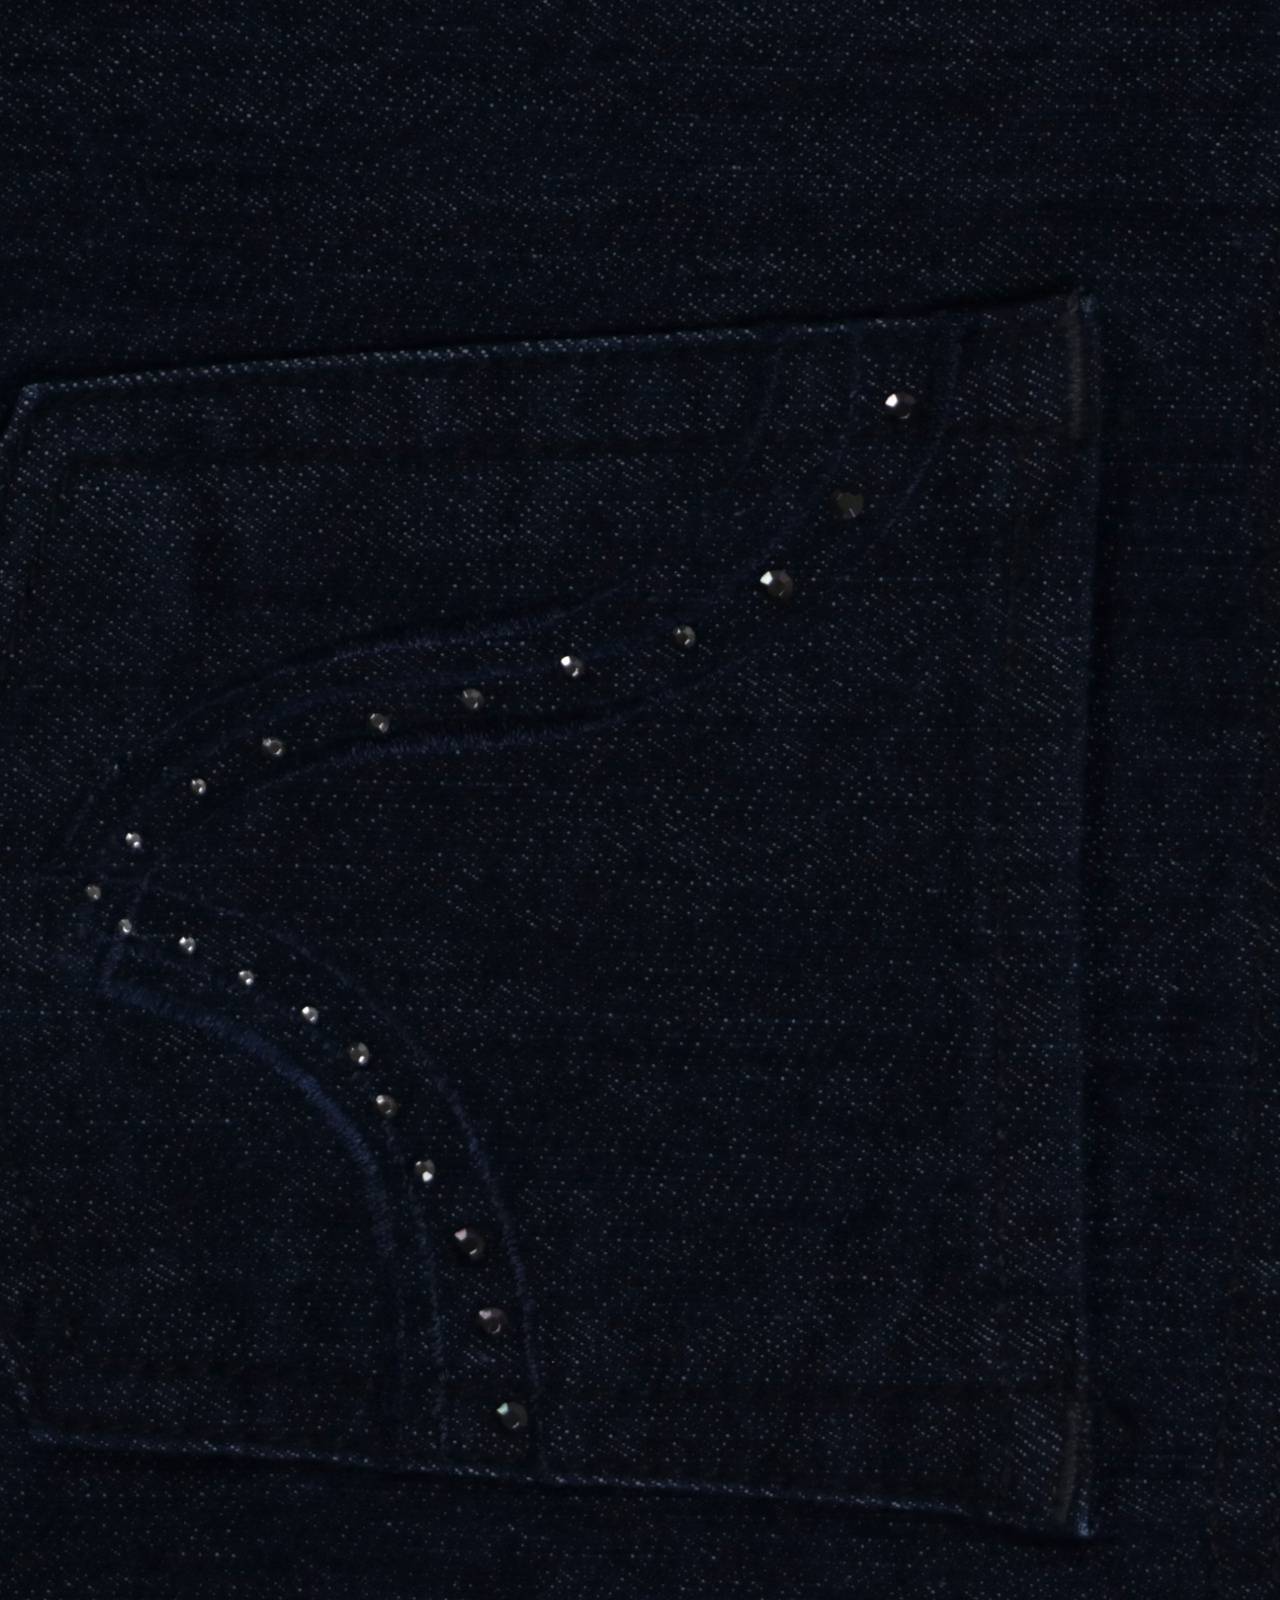 Jeans rectos Gloria Vanderbilt t. 2X